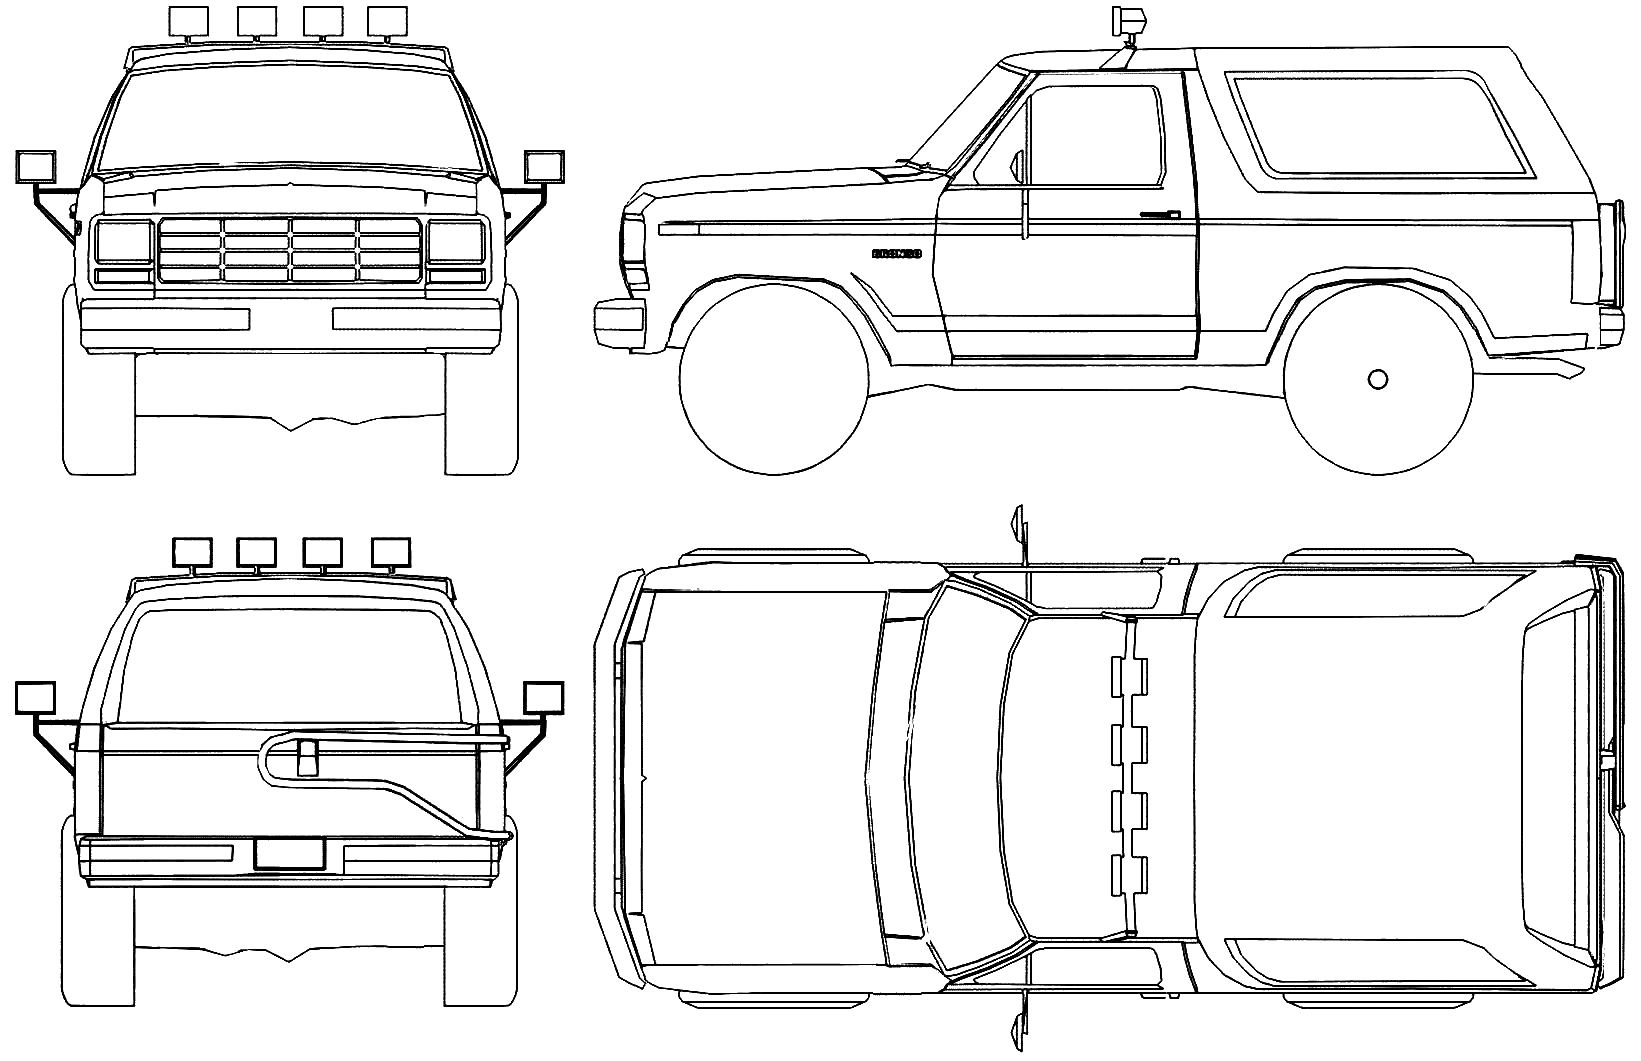 Ford Bronco blueprint